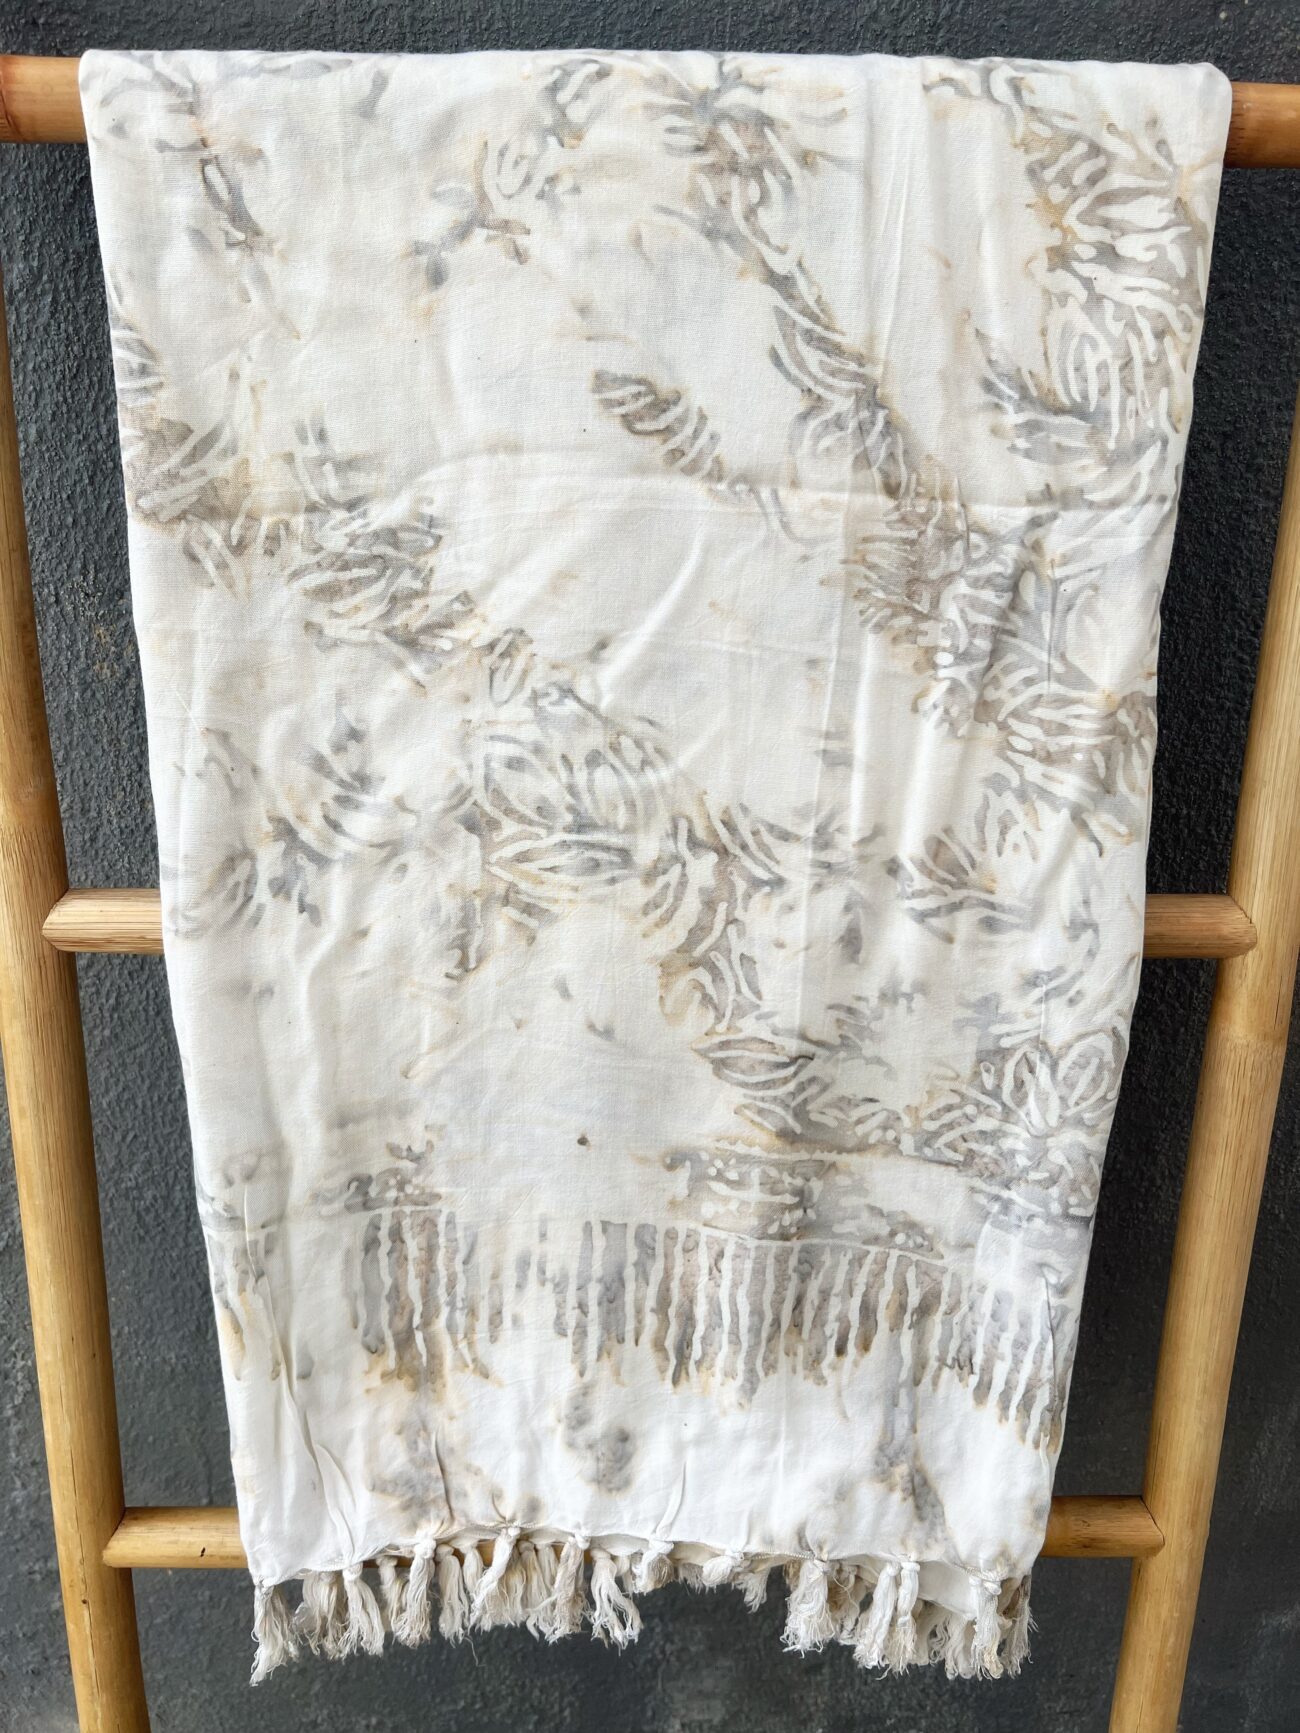 Bali Sarong Batik Tuch in Weiß-Grau-Beige Tönen